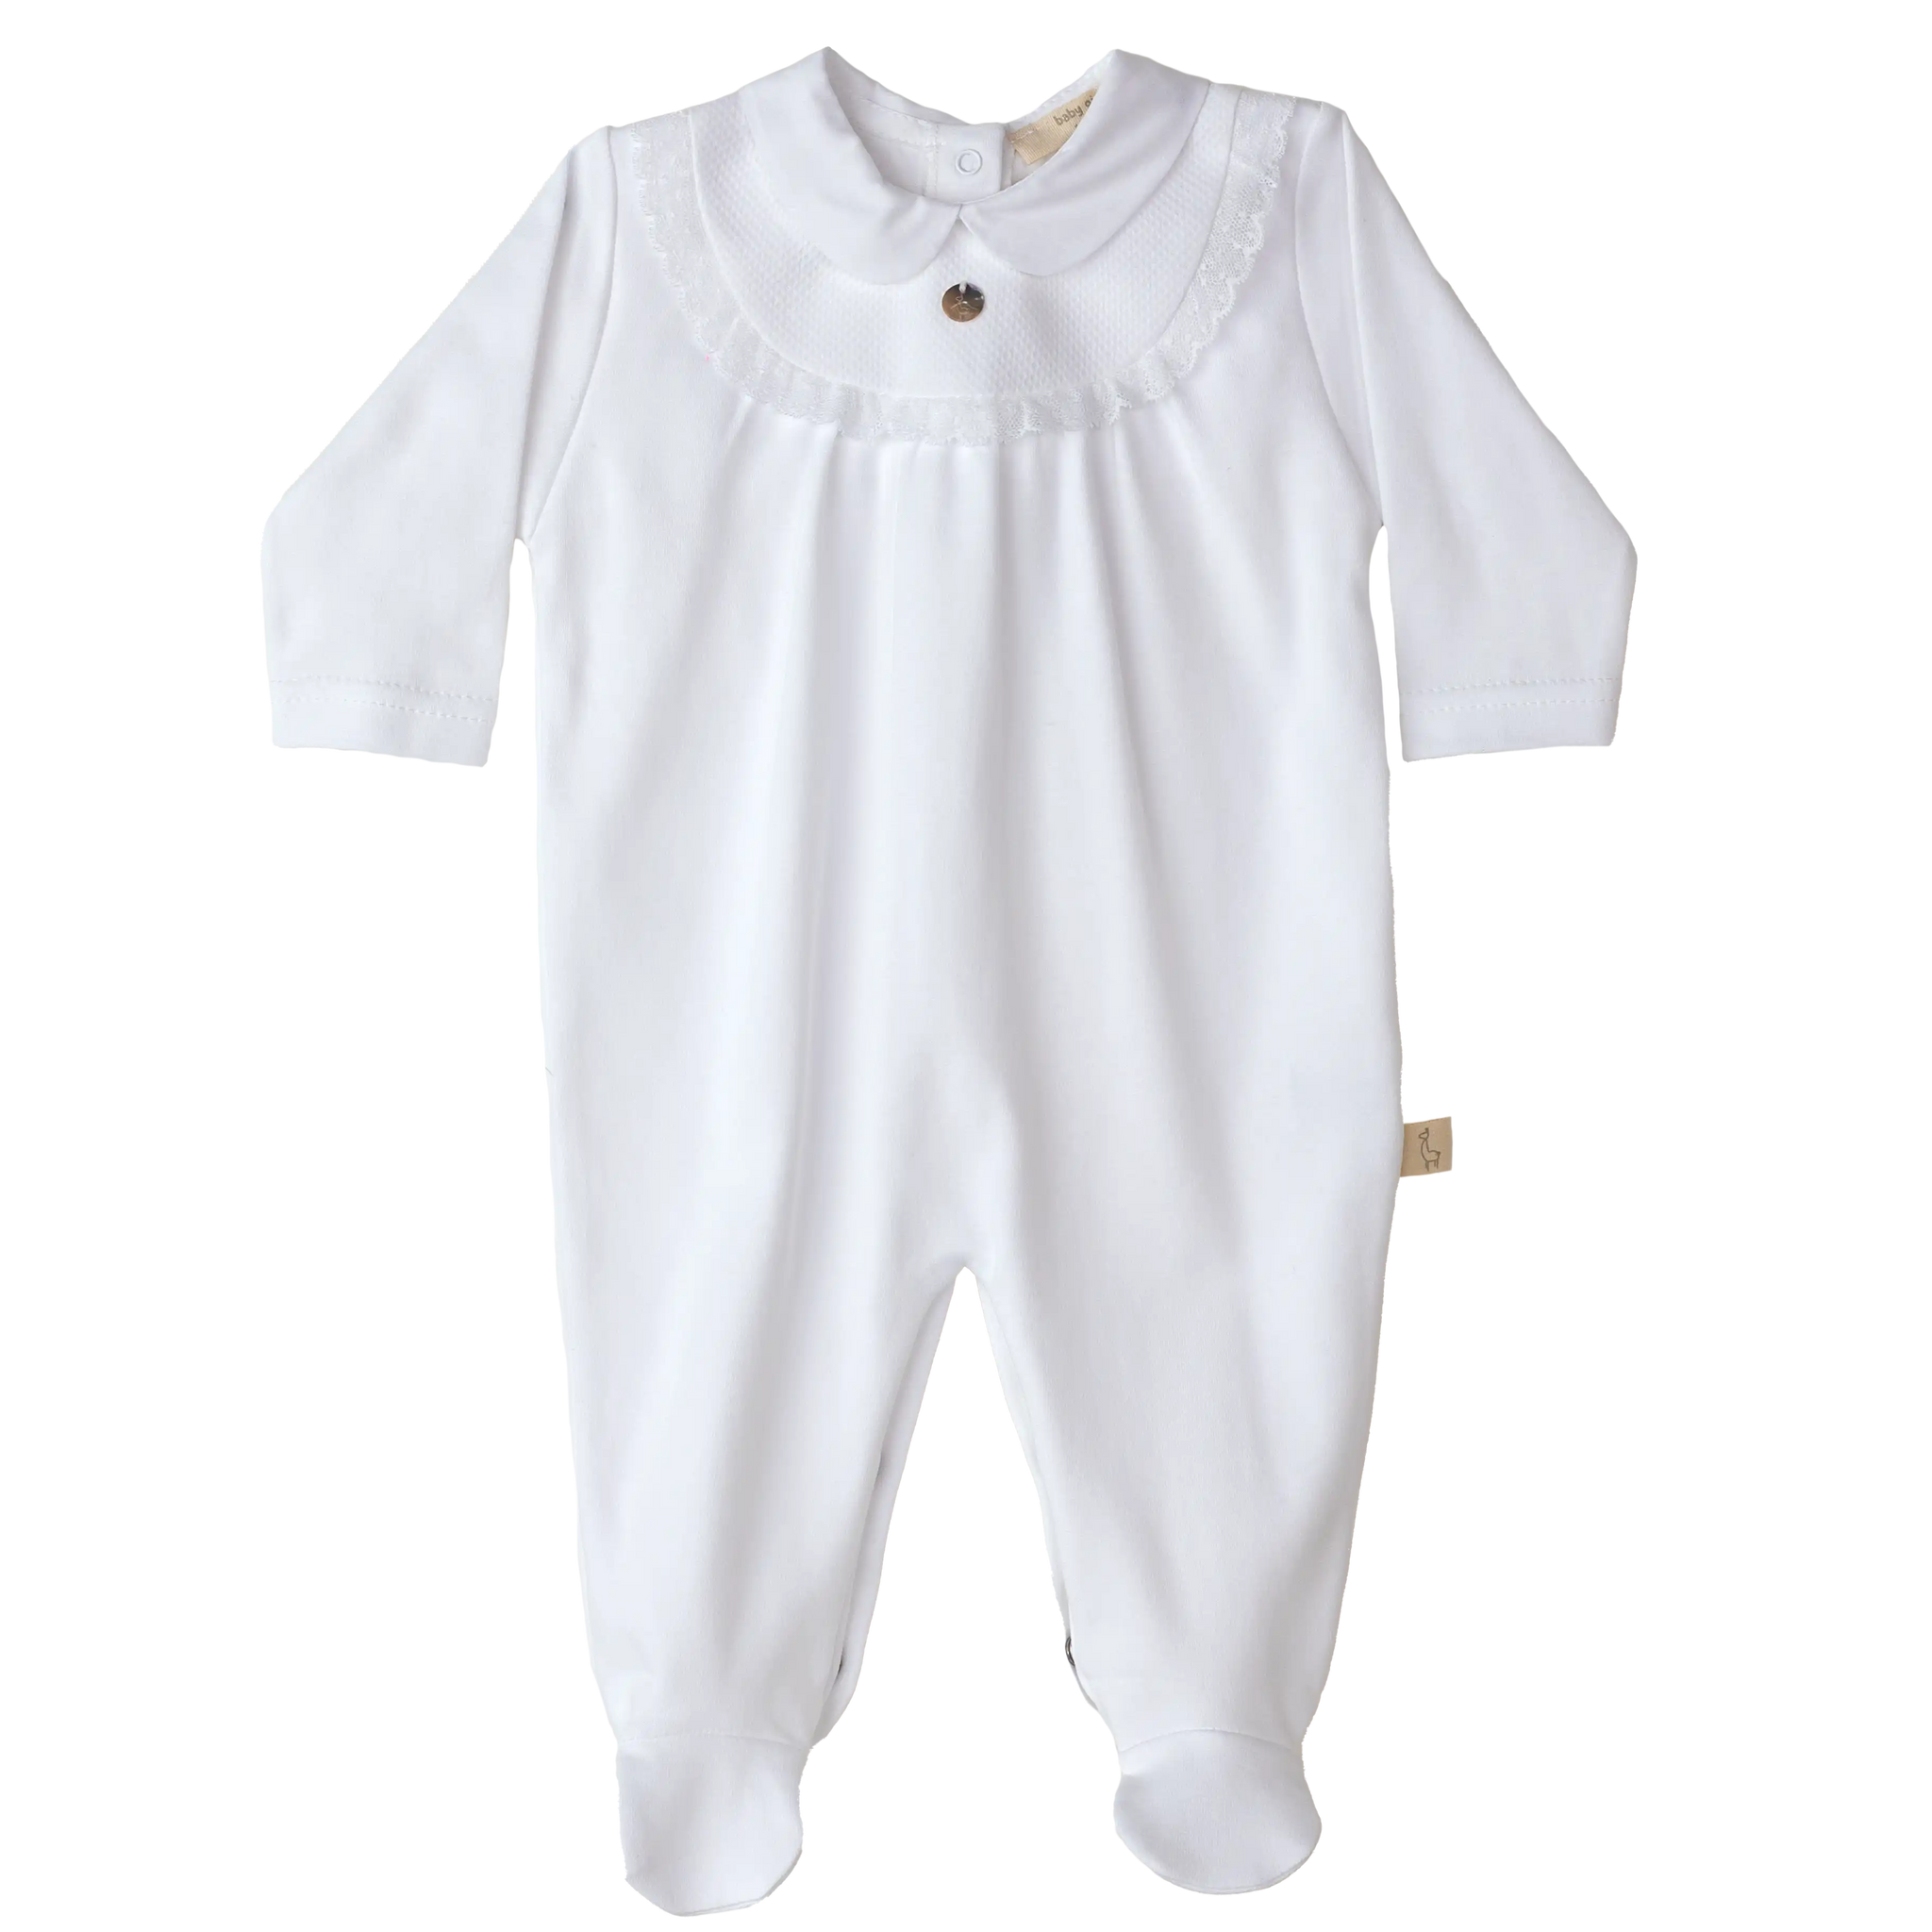 Baby Gi Peter Pan Collar Sleepsuit White